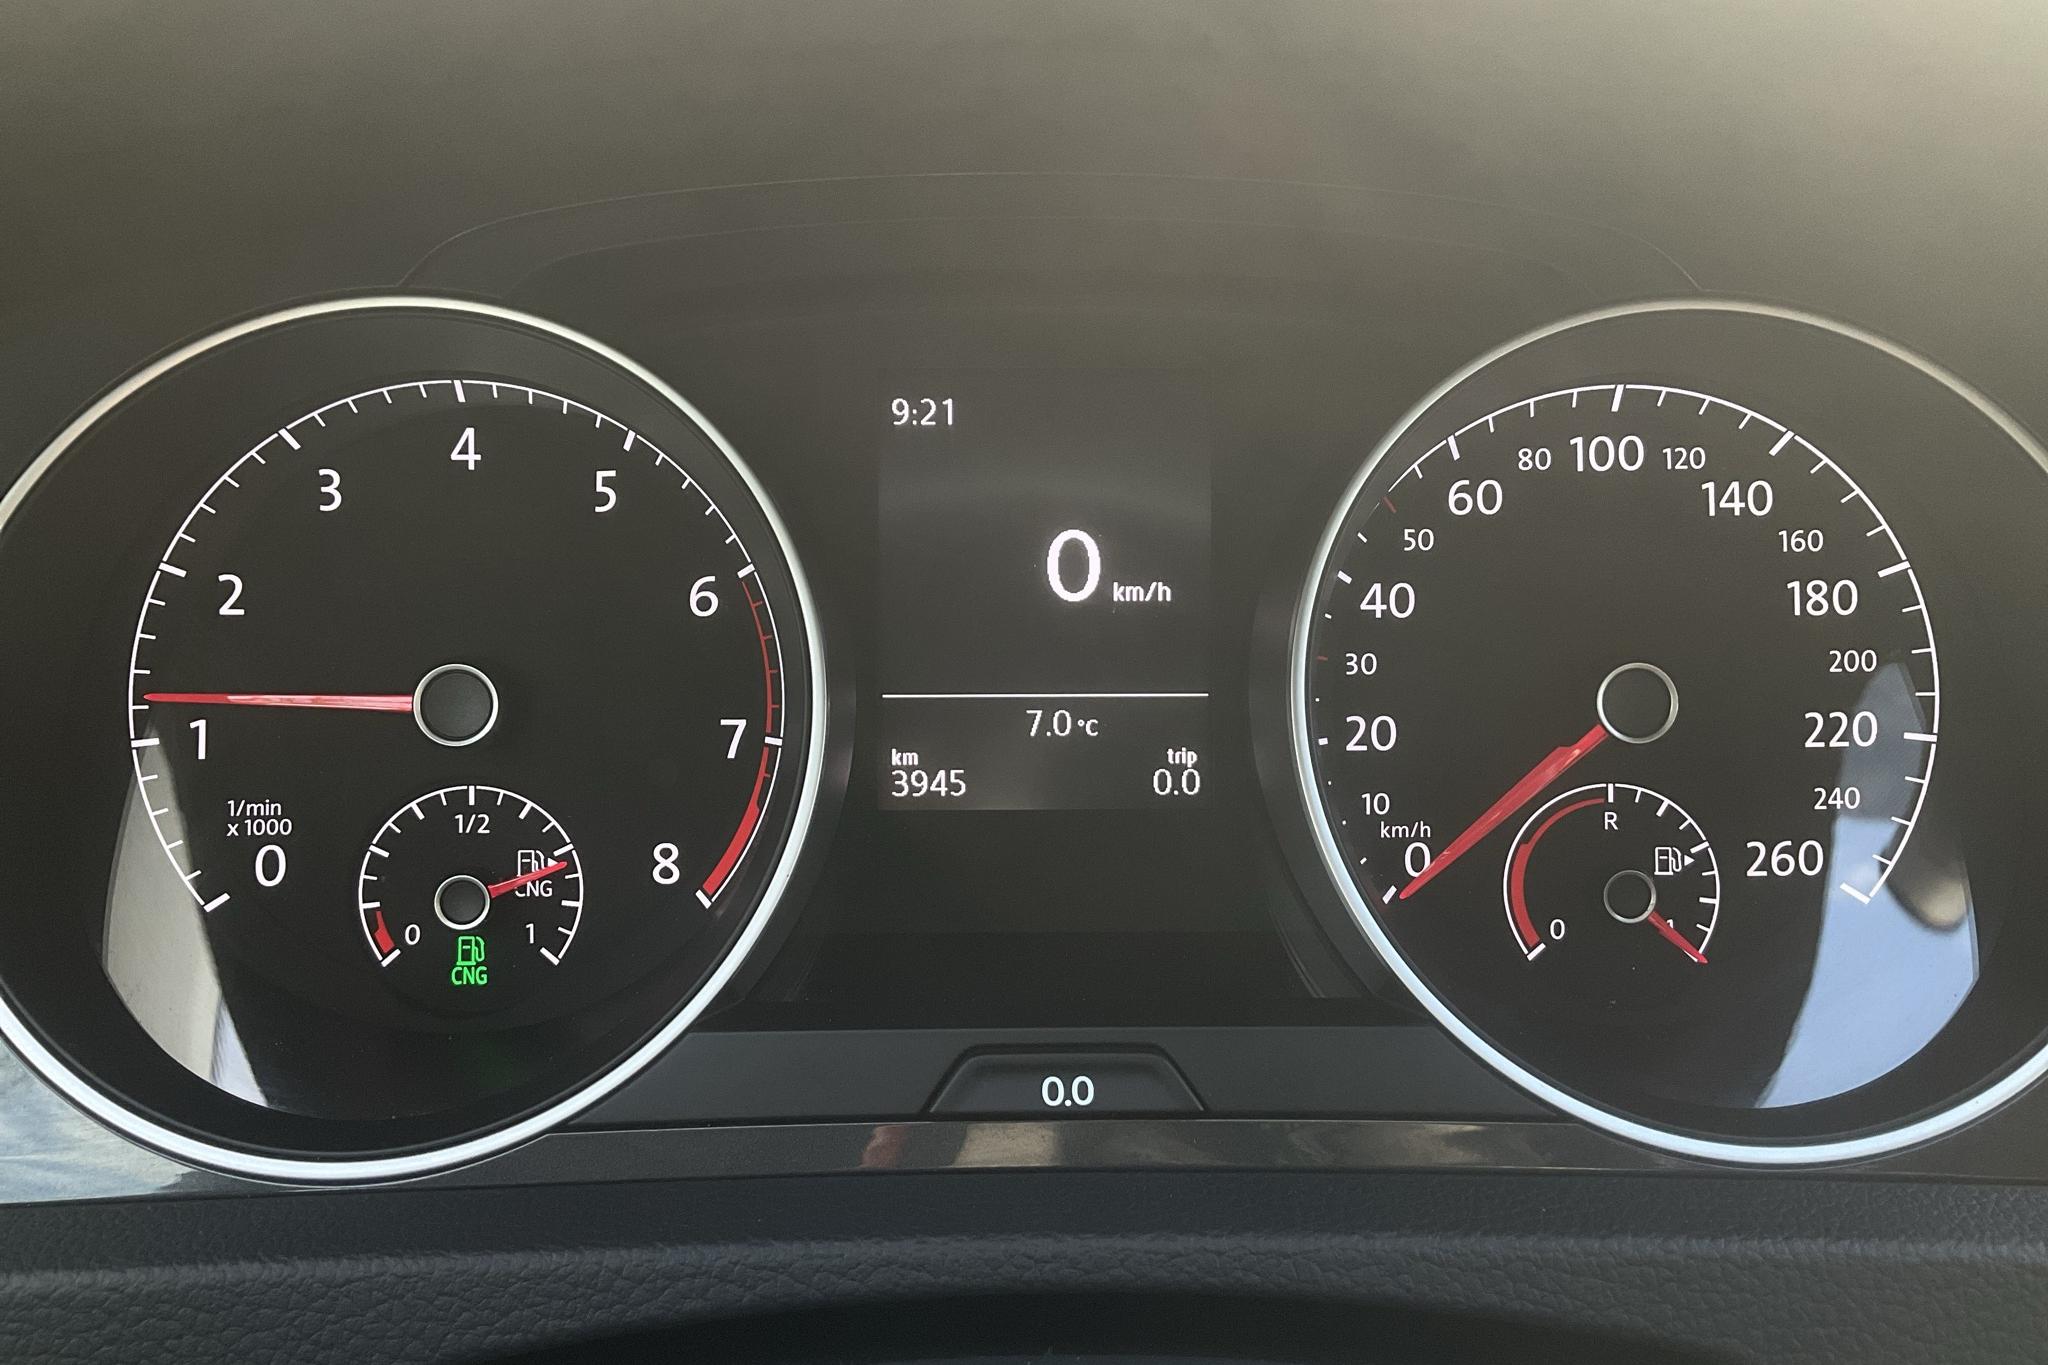 VW Golf VII 1.5 TGI Sportscombi (130hk) - 3 950 km - Manual - silver - 2019